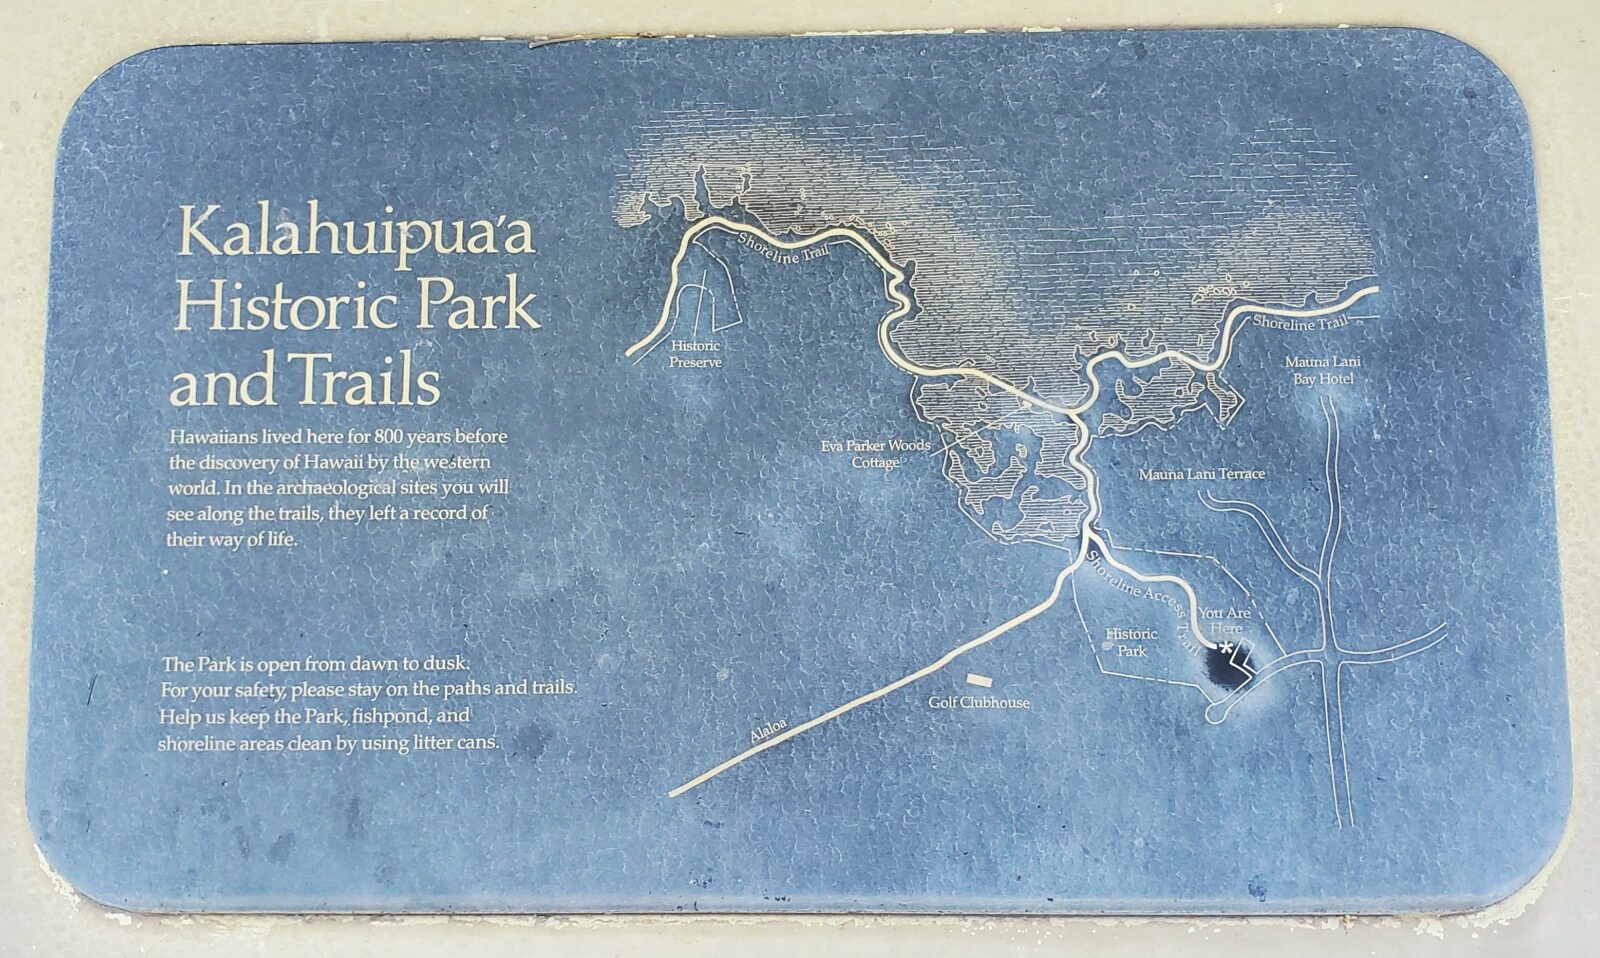 Kalahuipuaa Historic Park